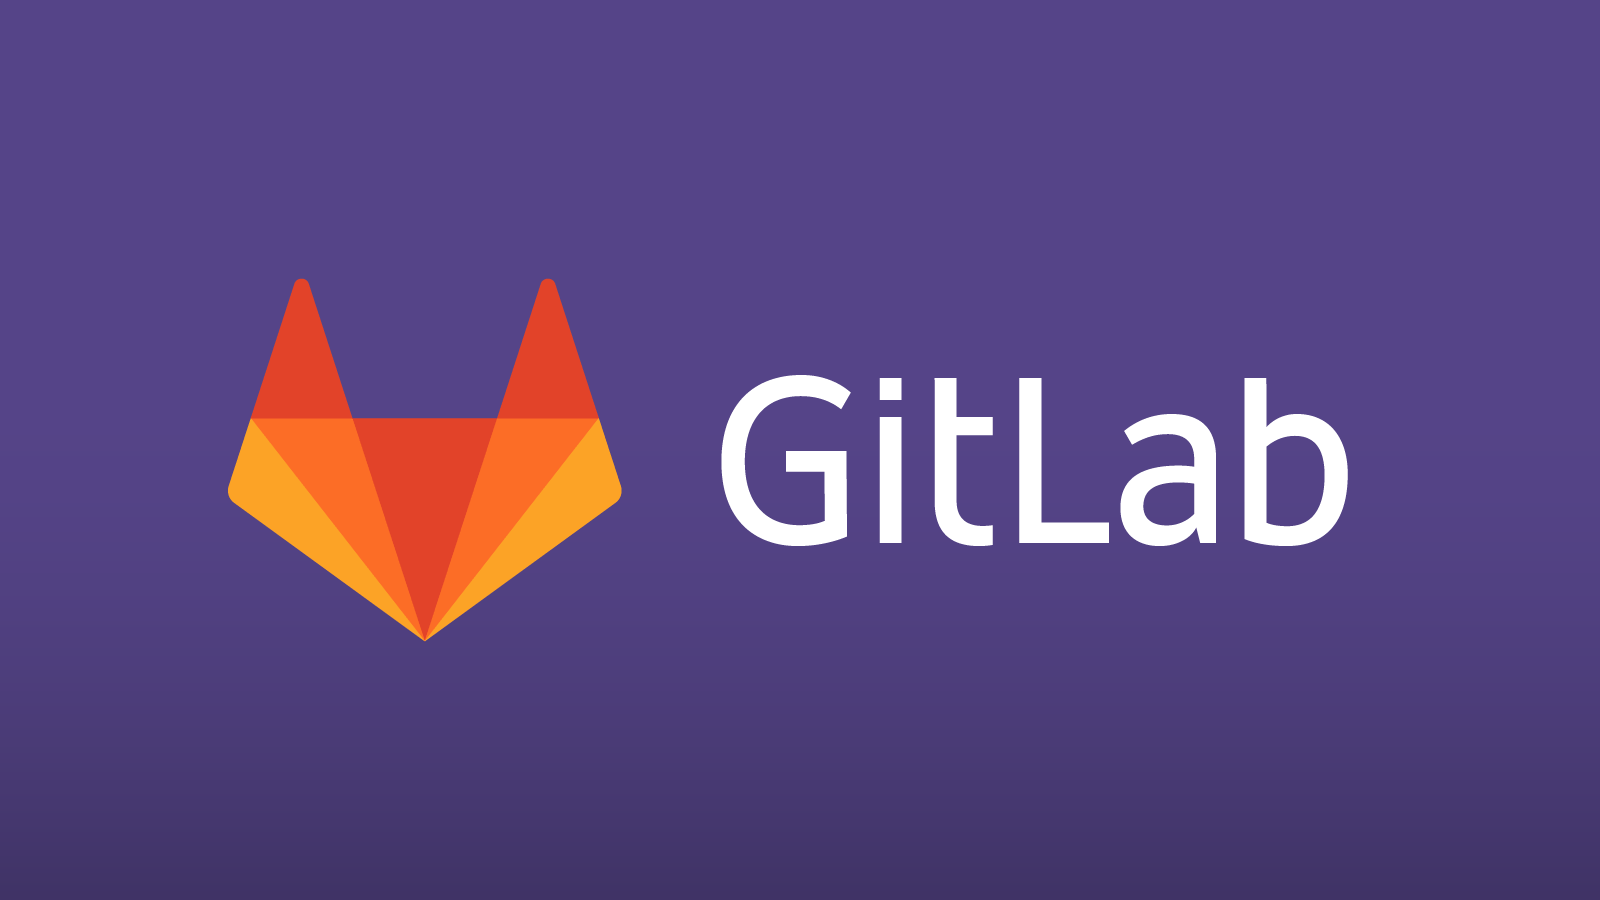 GitLab IPO-Investors king